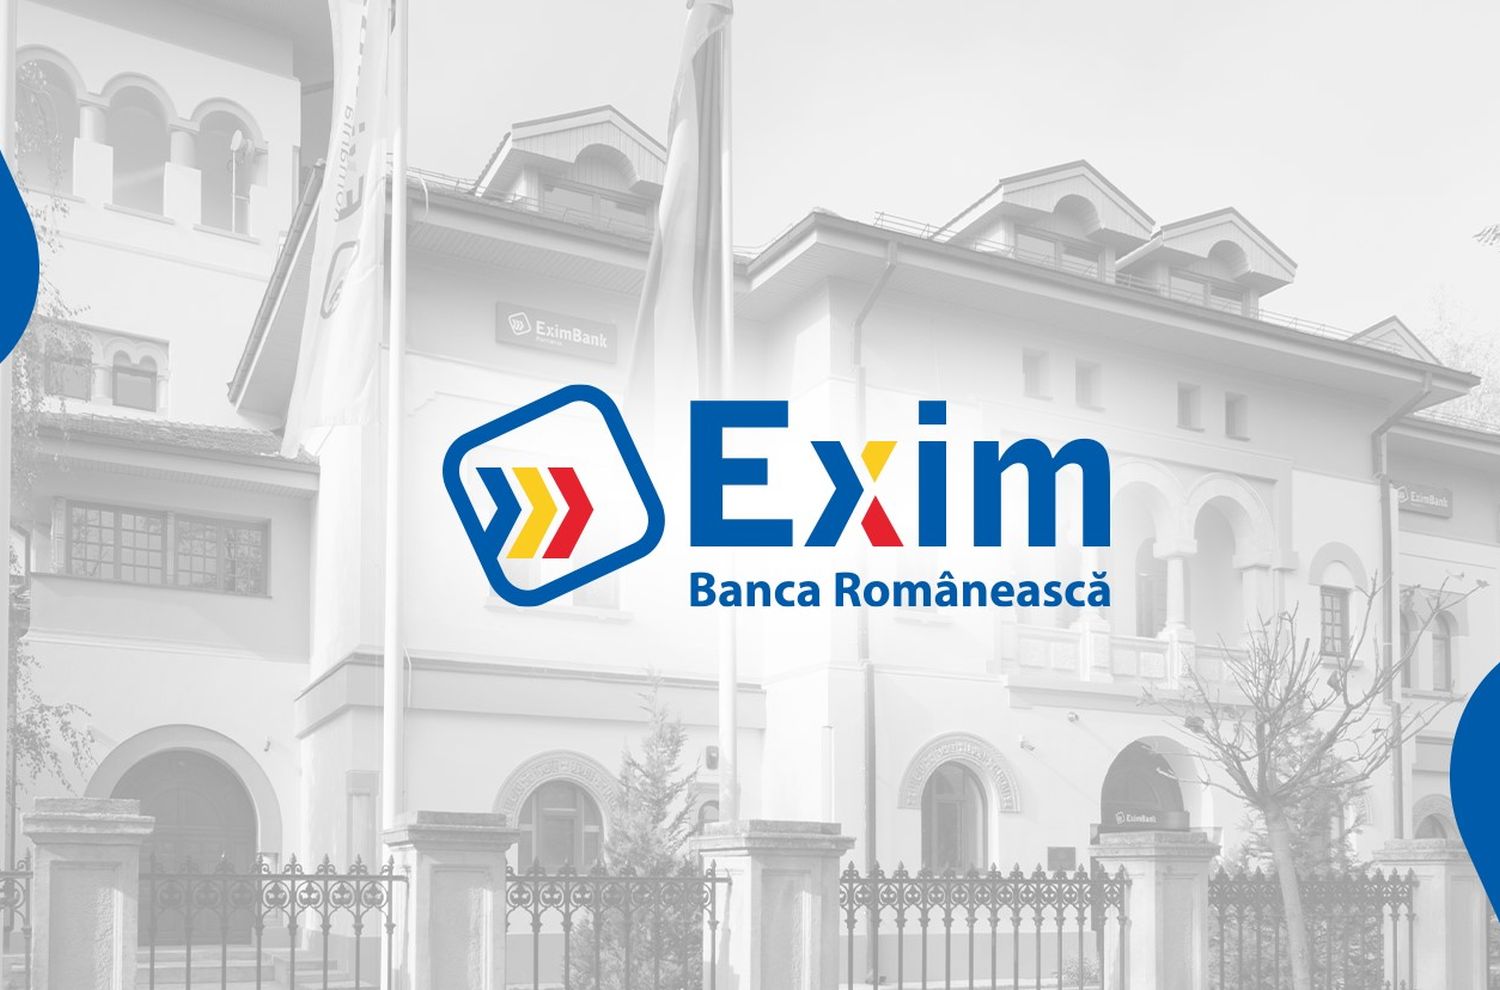 Produse bancare 100% online de la Exim Banca Românească - Stiri ...